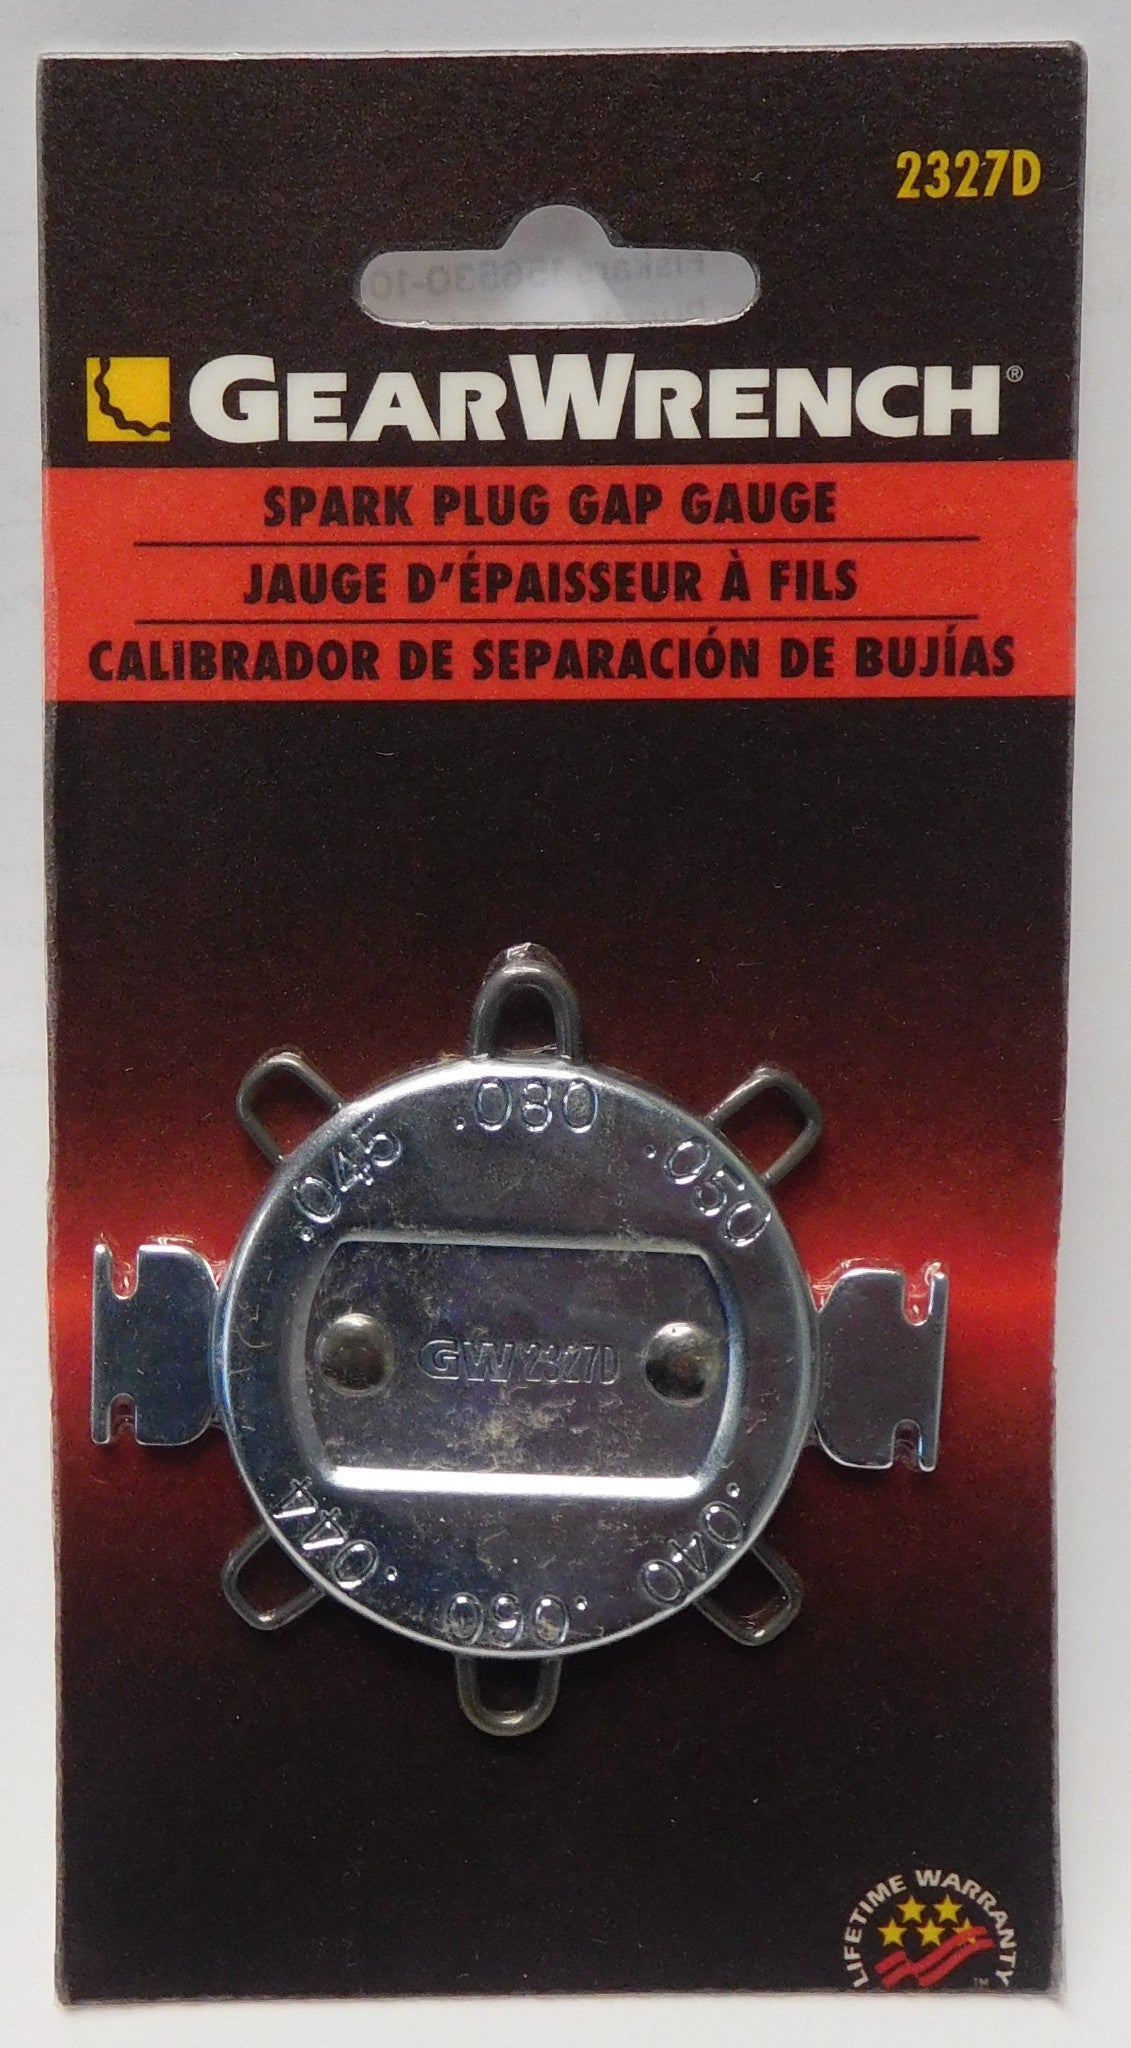 GearWrench Spark Plug Gap Gauge 2327d USA